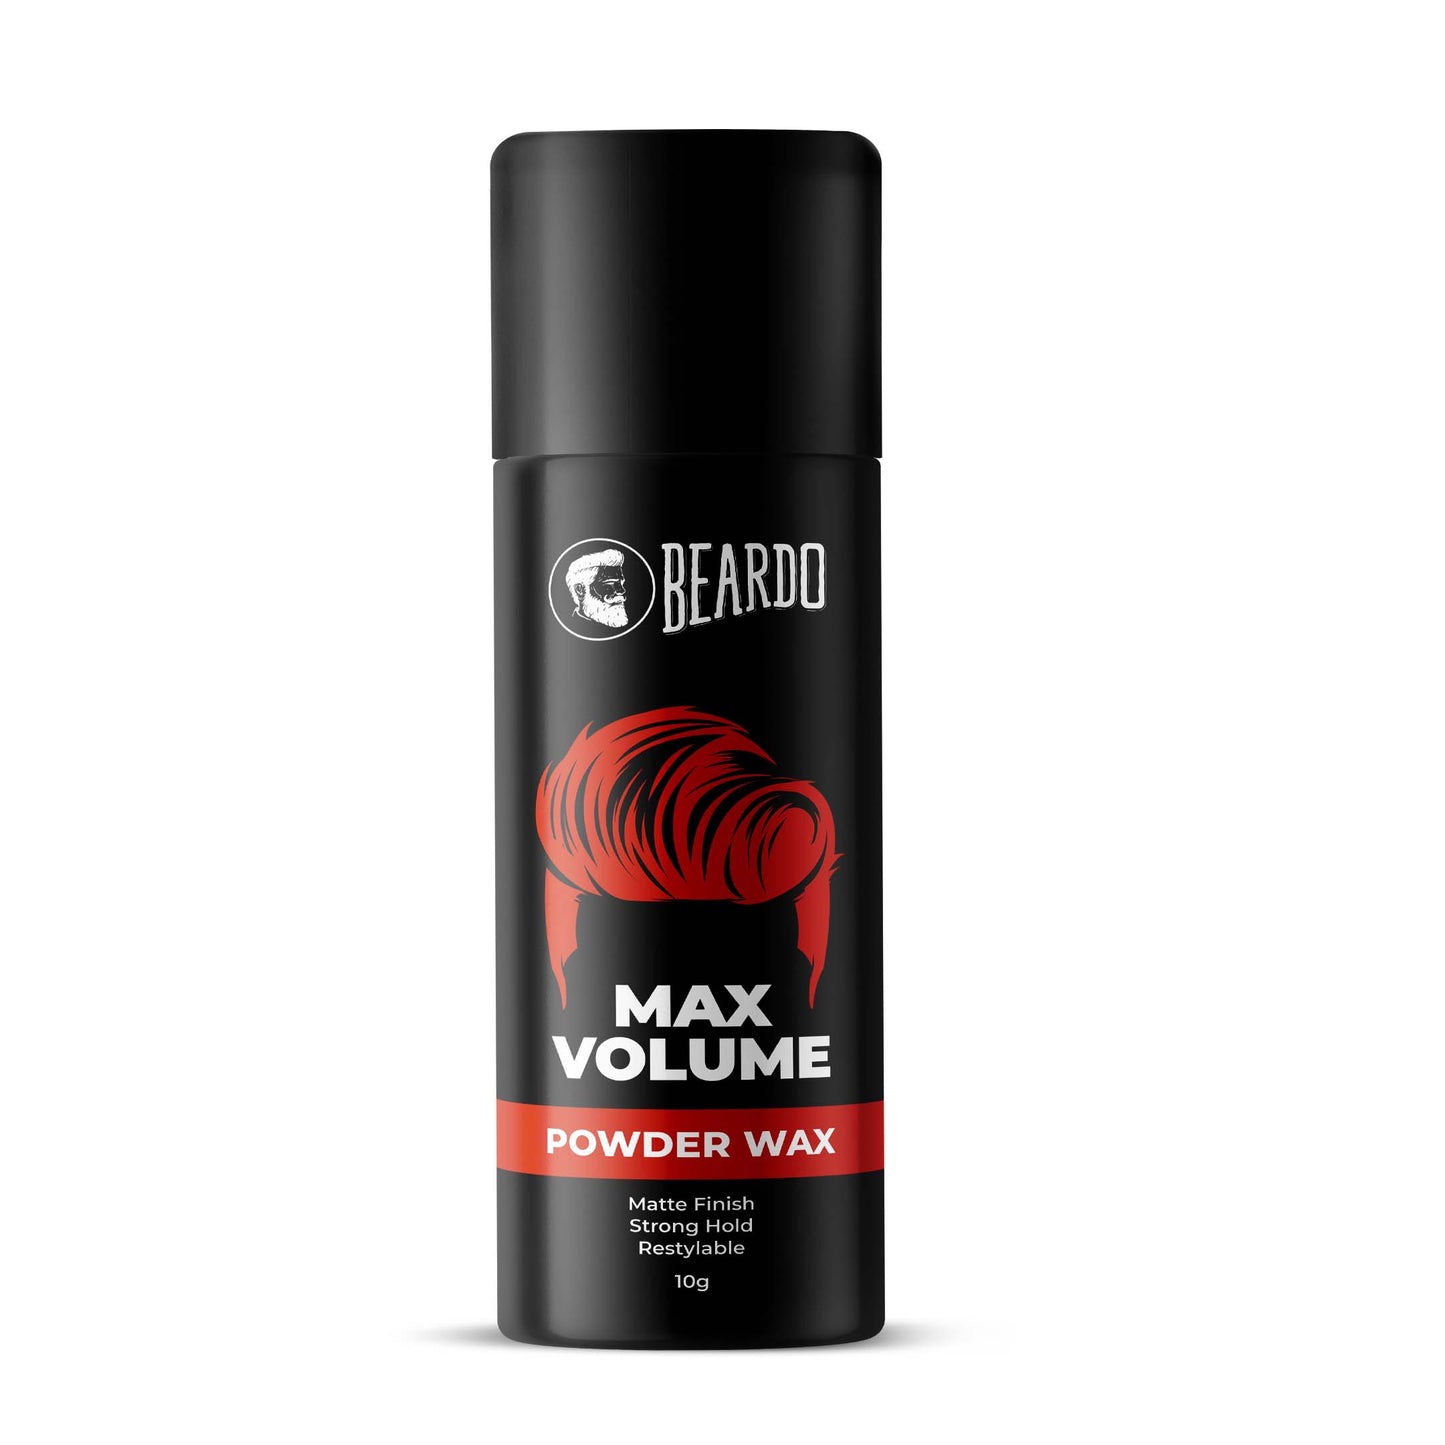 max volume powder wax, matte finish